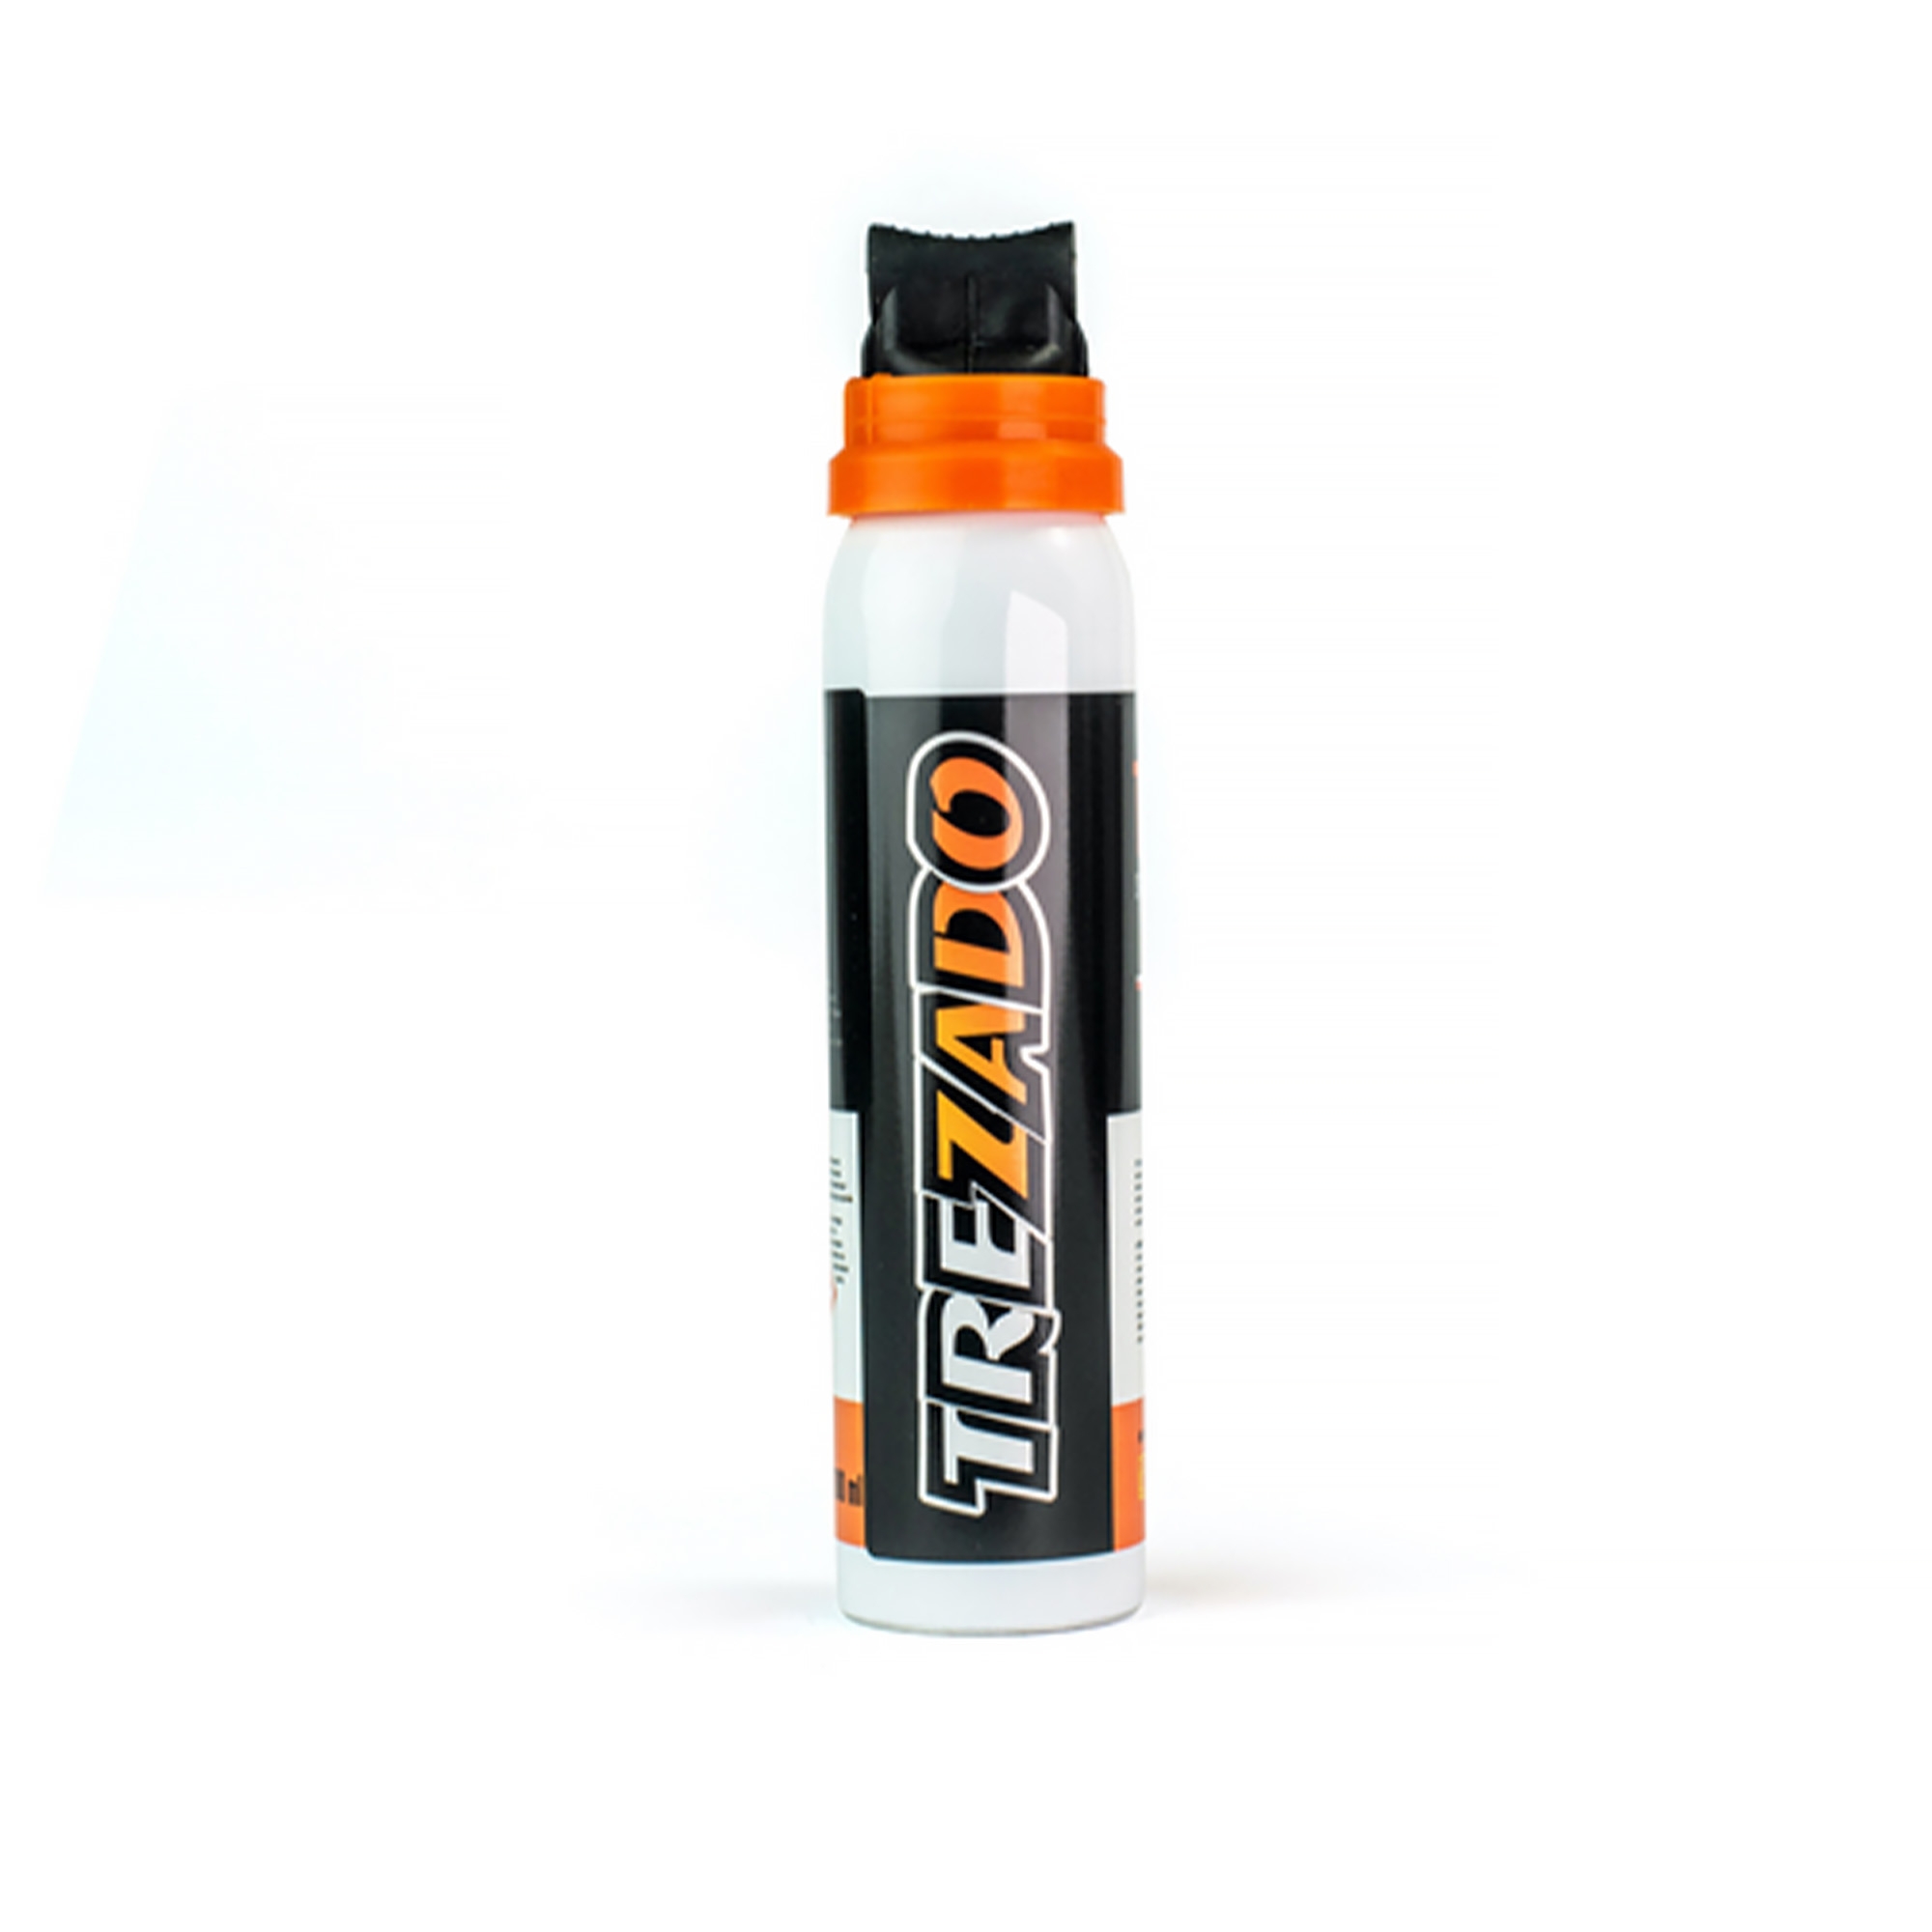 Spray naprawczy TREZADO Turbo Repair 100 ml